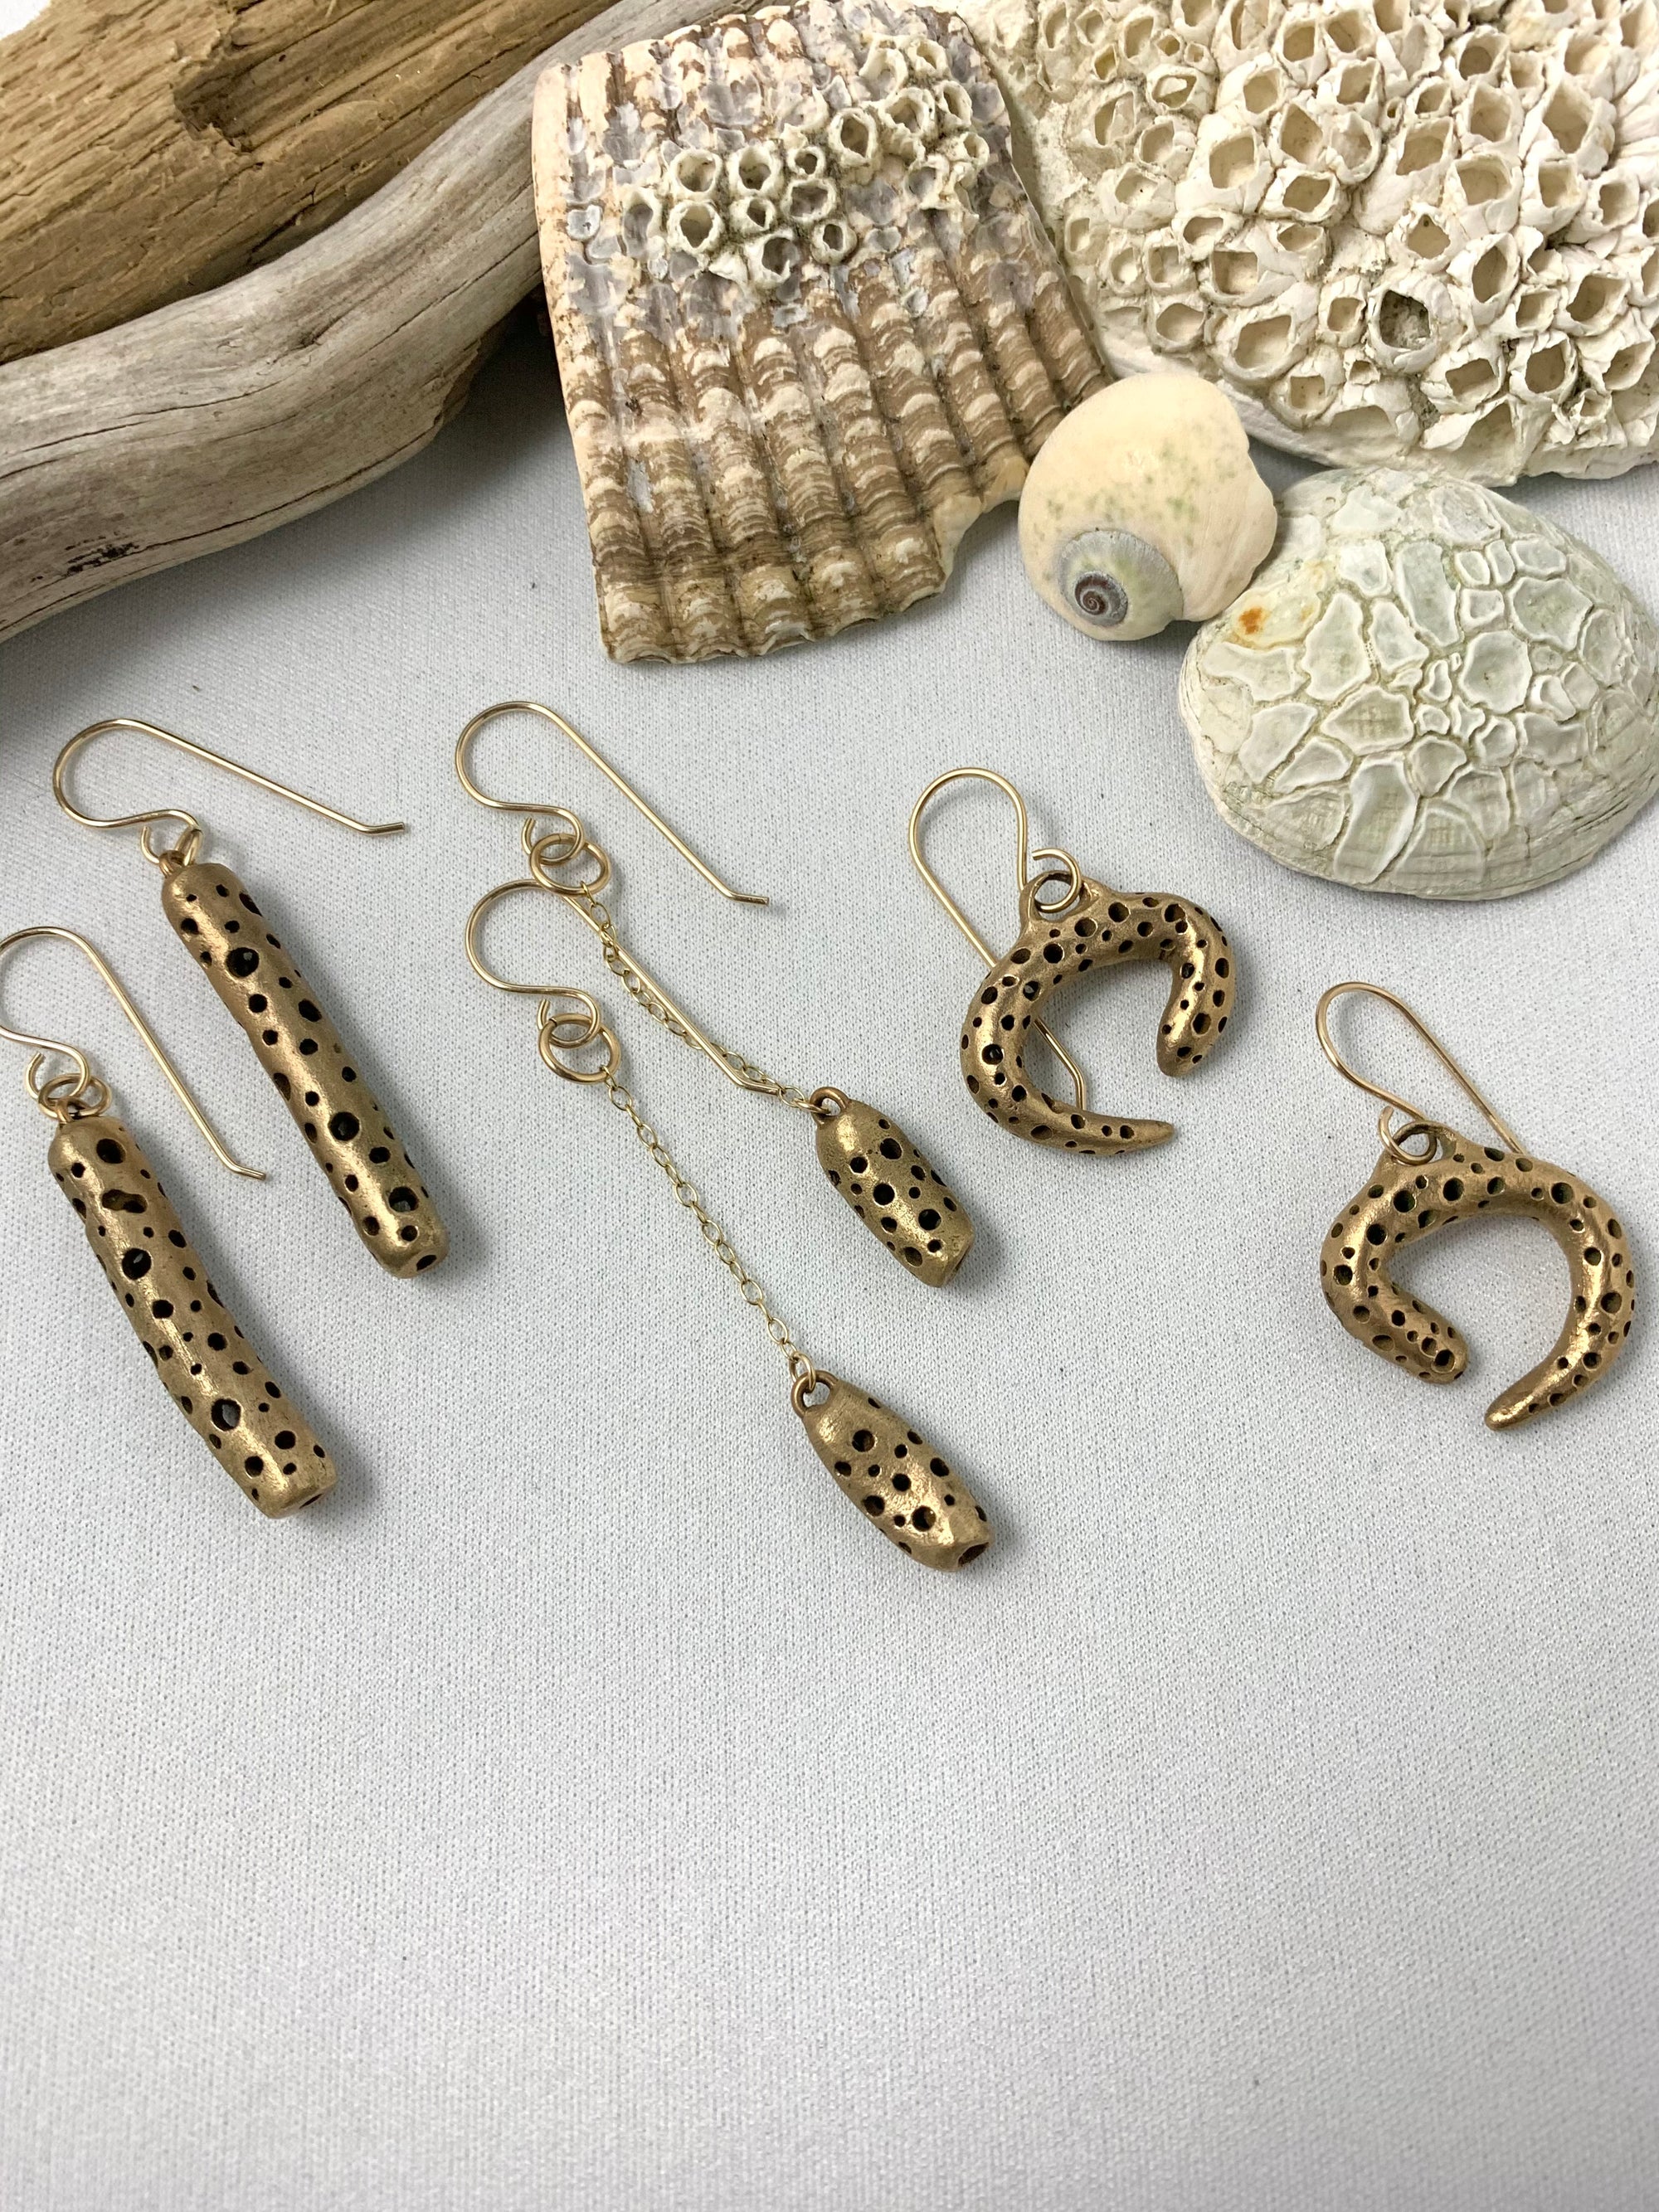 Favourite everyday handmade bronze earrings